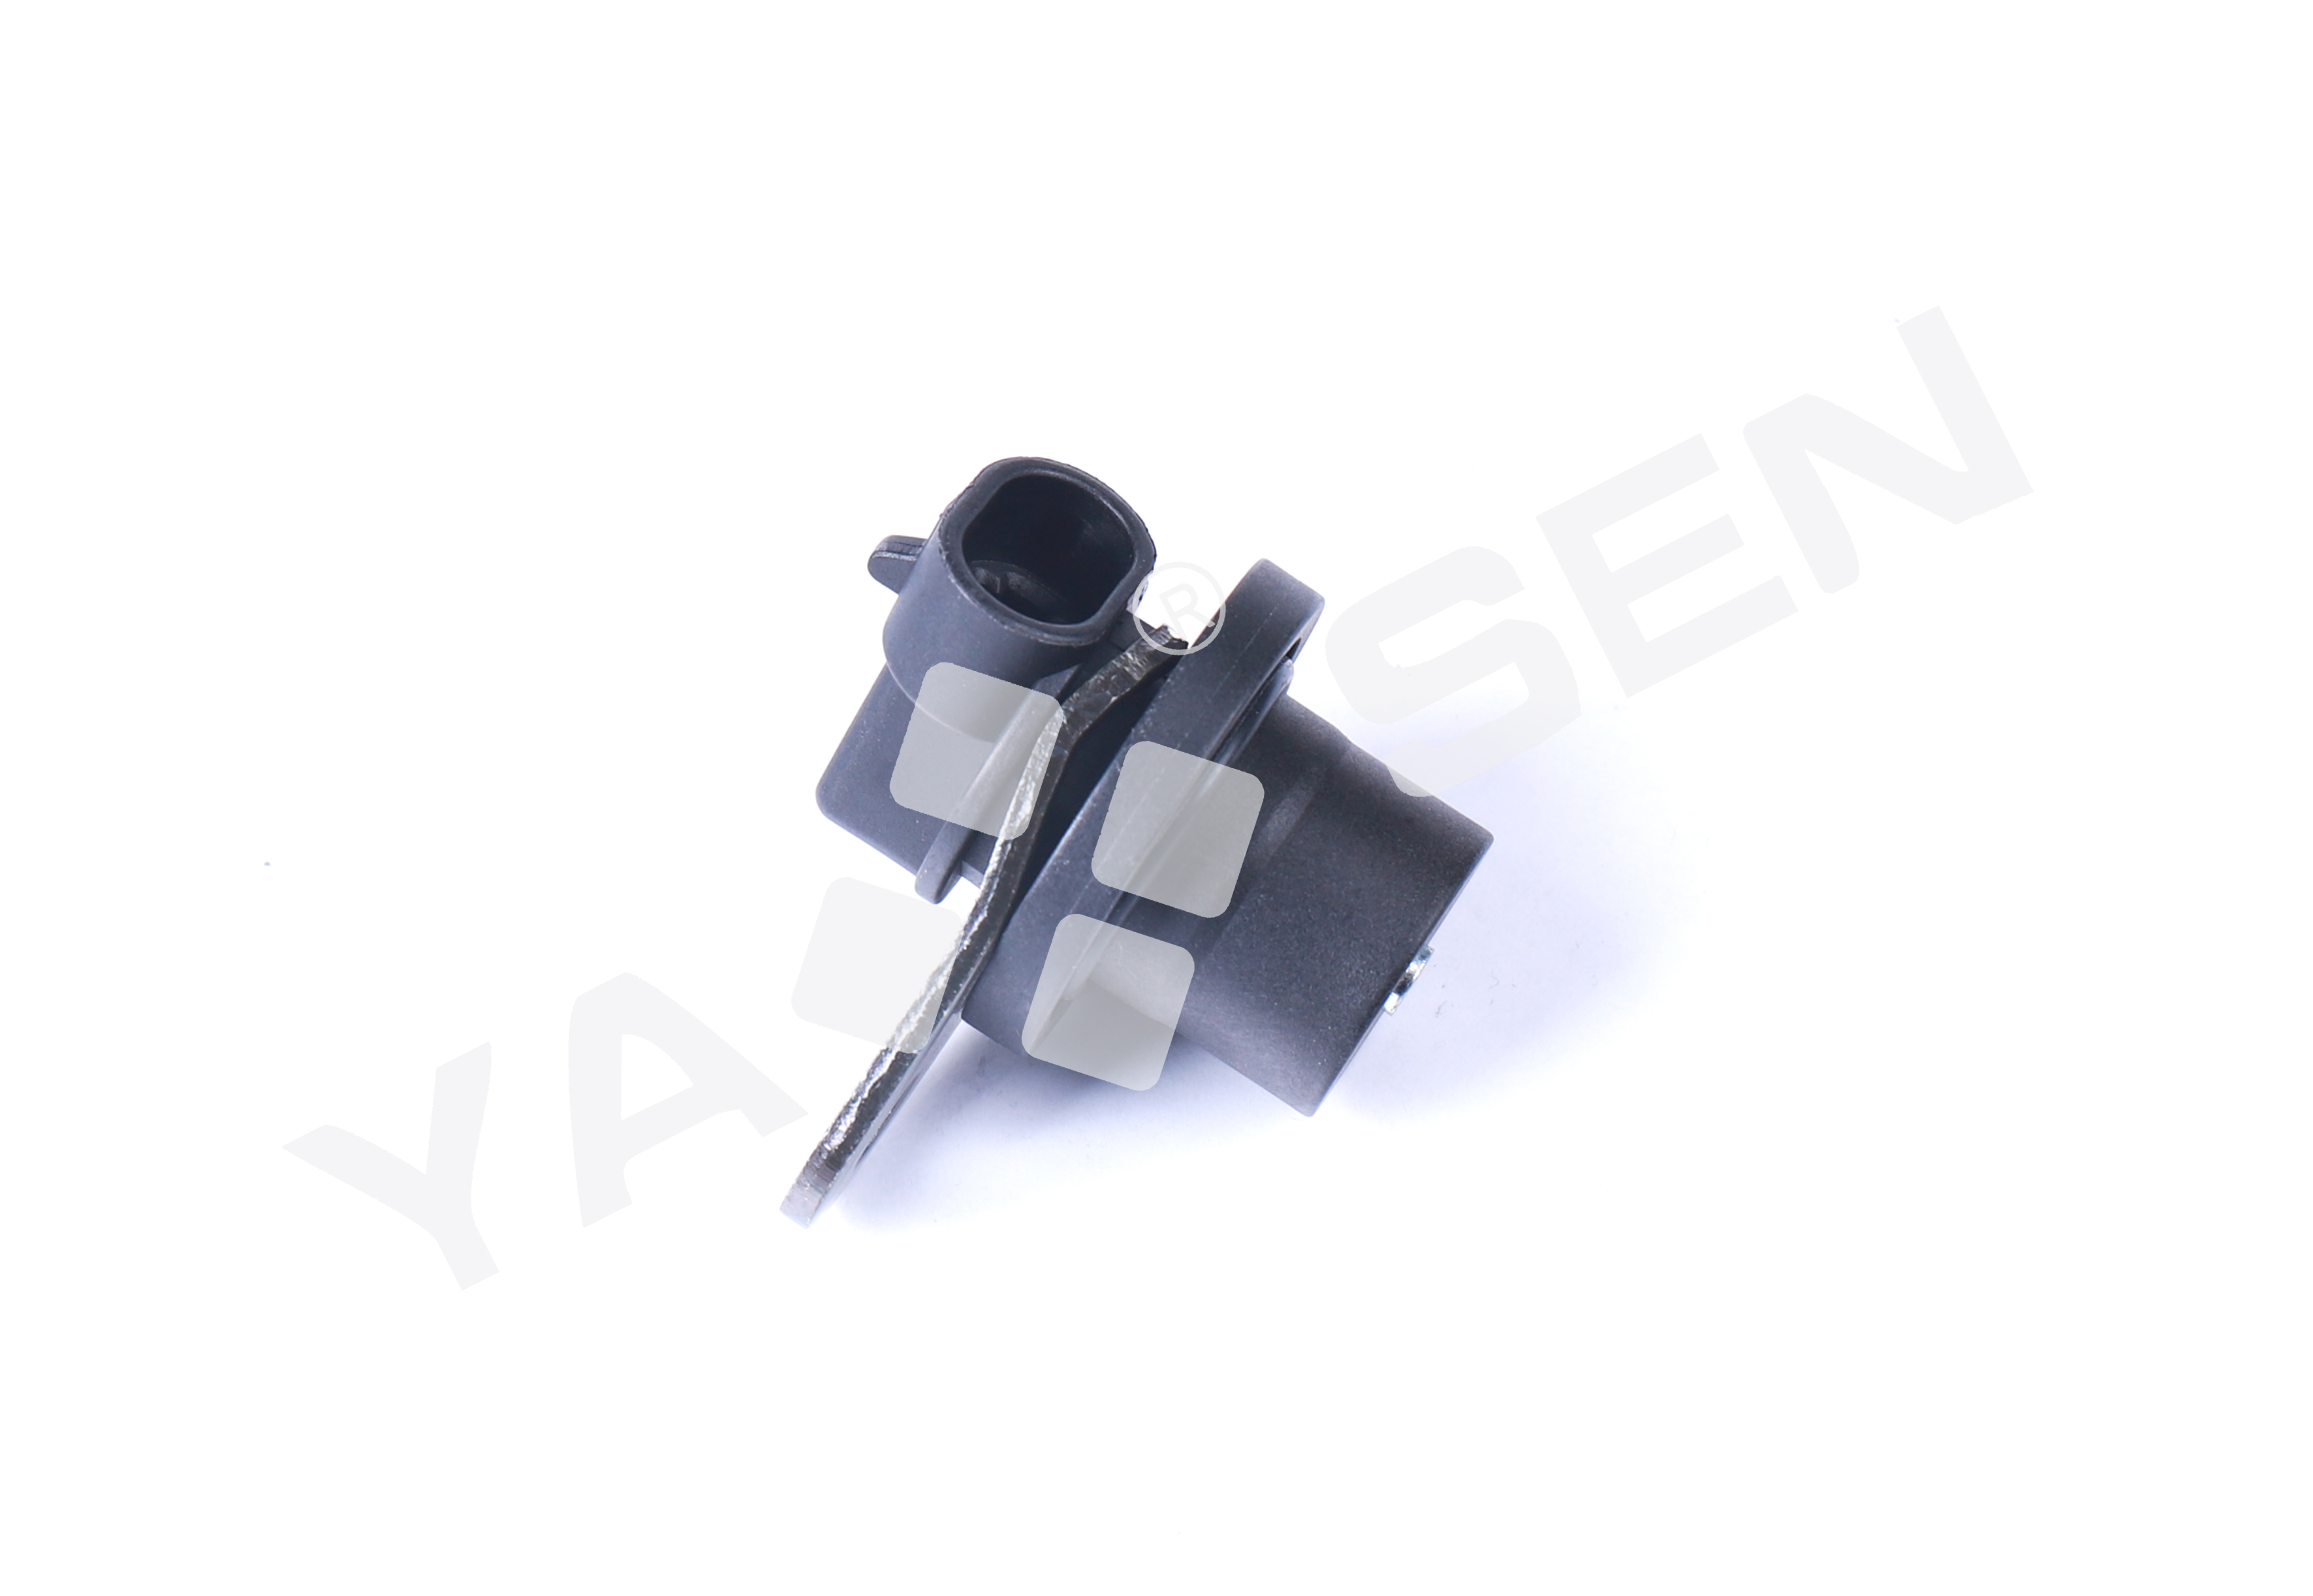 Auto Camshaft position sensor  for CHEVROLET/DODGE, 10456041  PC31  5S1245  SU1055  D8006  S10069  CSS107 SS10003